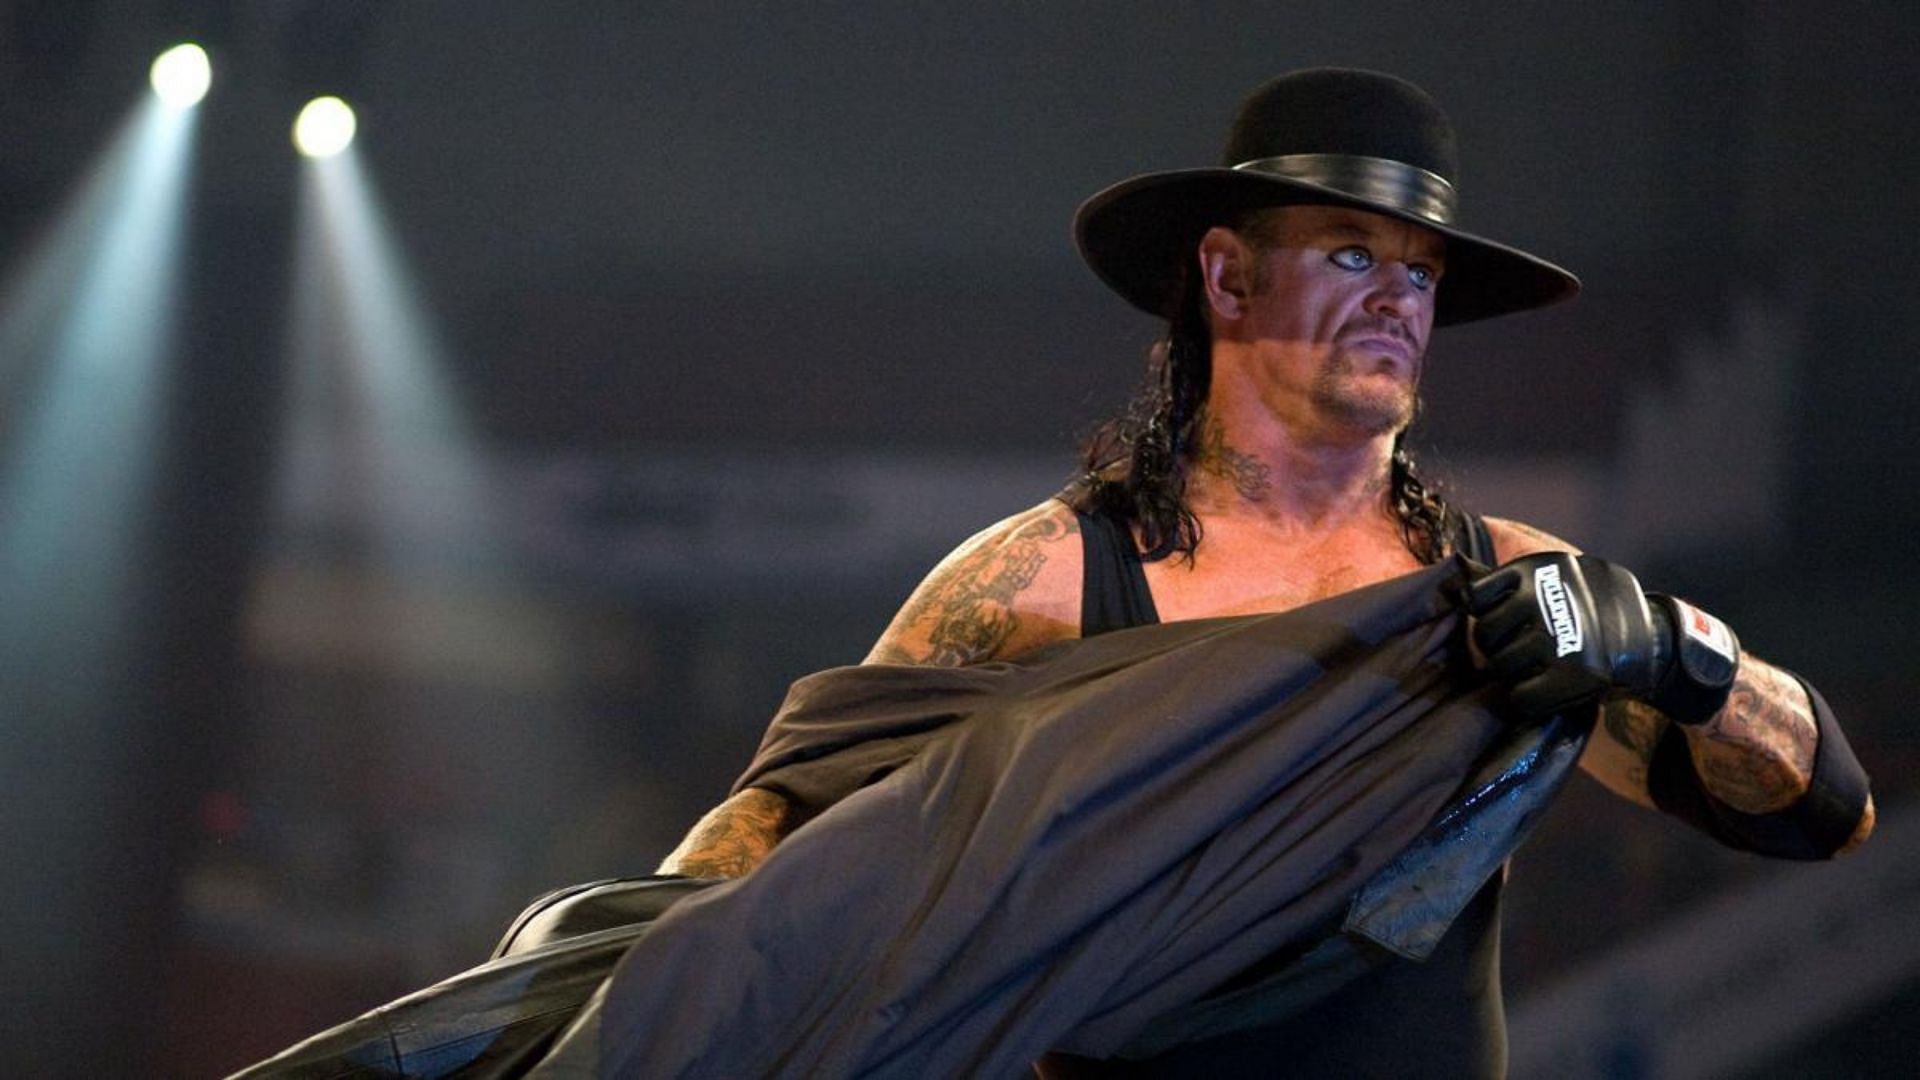 The Undertaker feuded with Bray Wyatt in 2015